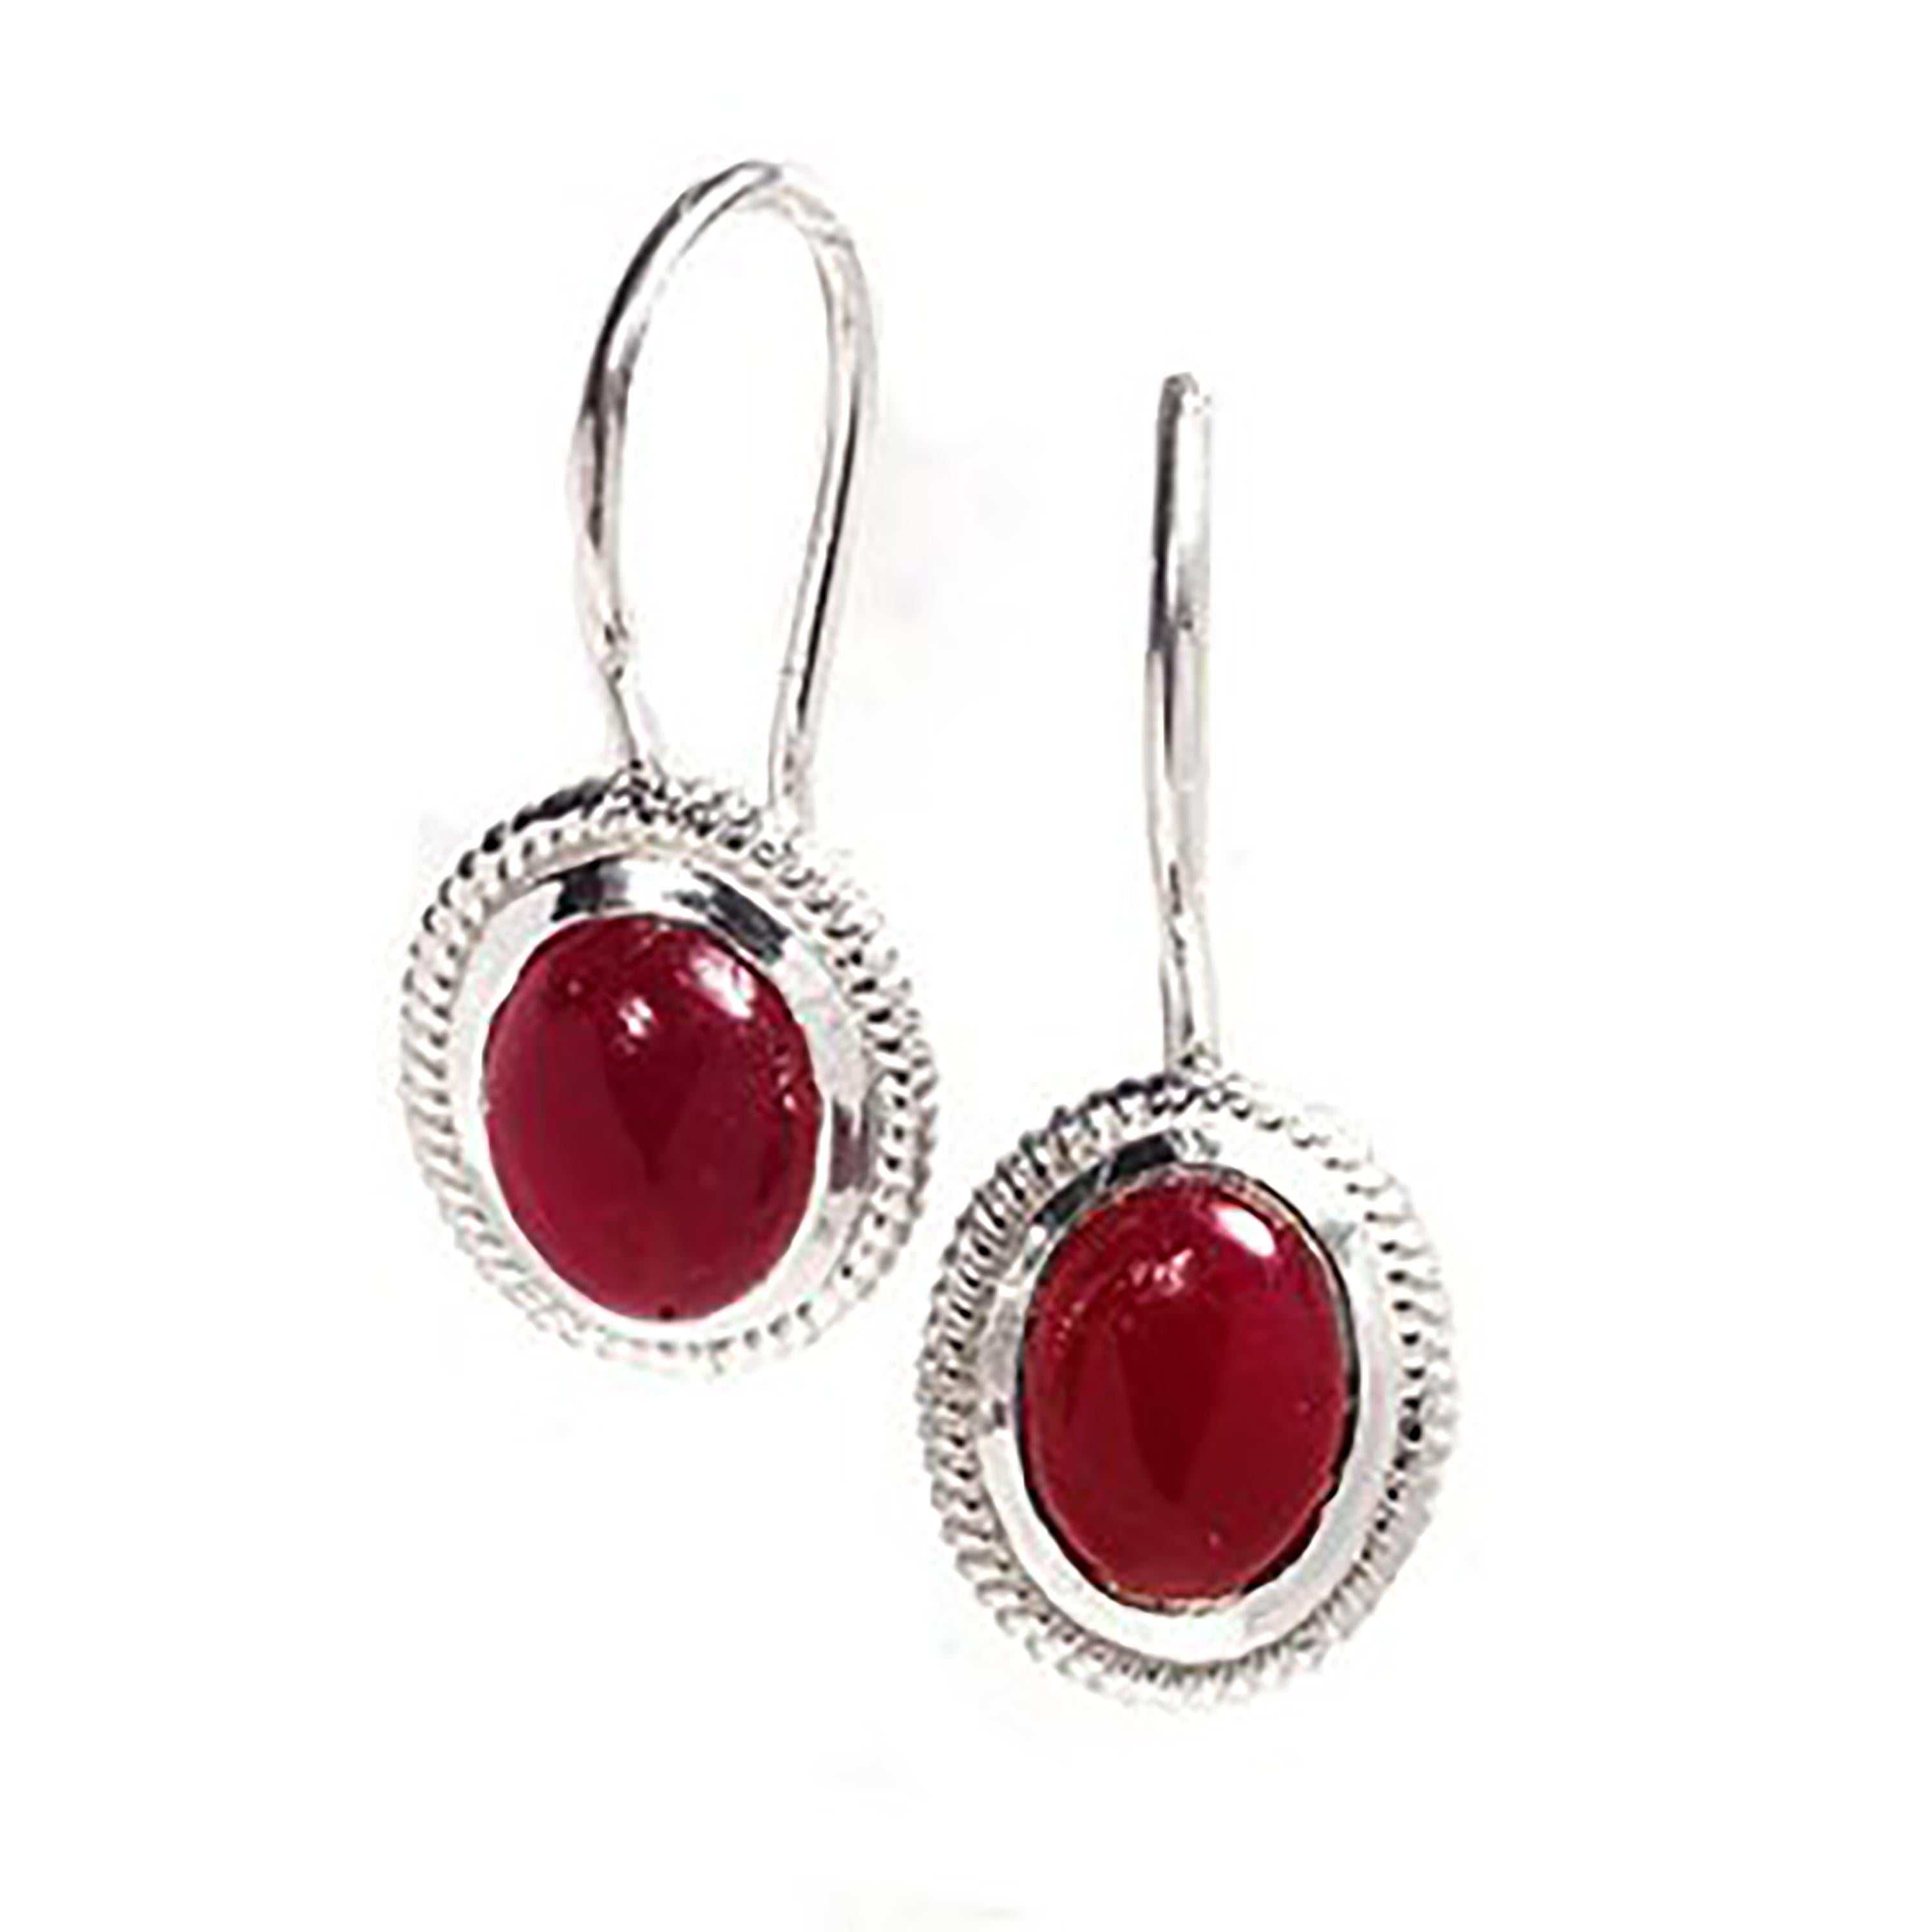 Sterling silver roped design hoop drop earrings 
Pair of cabochon ruby weighing 5.00 carats
Measuring 0.60